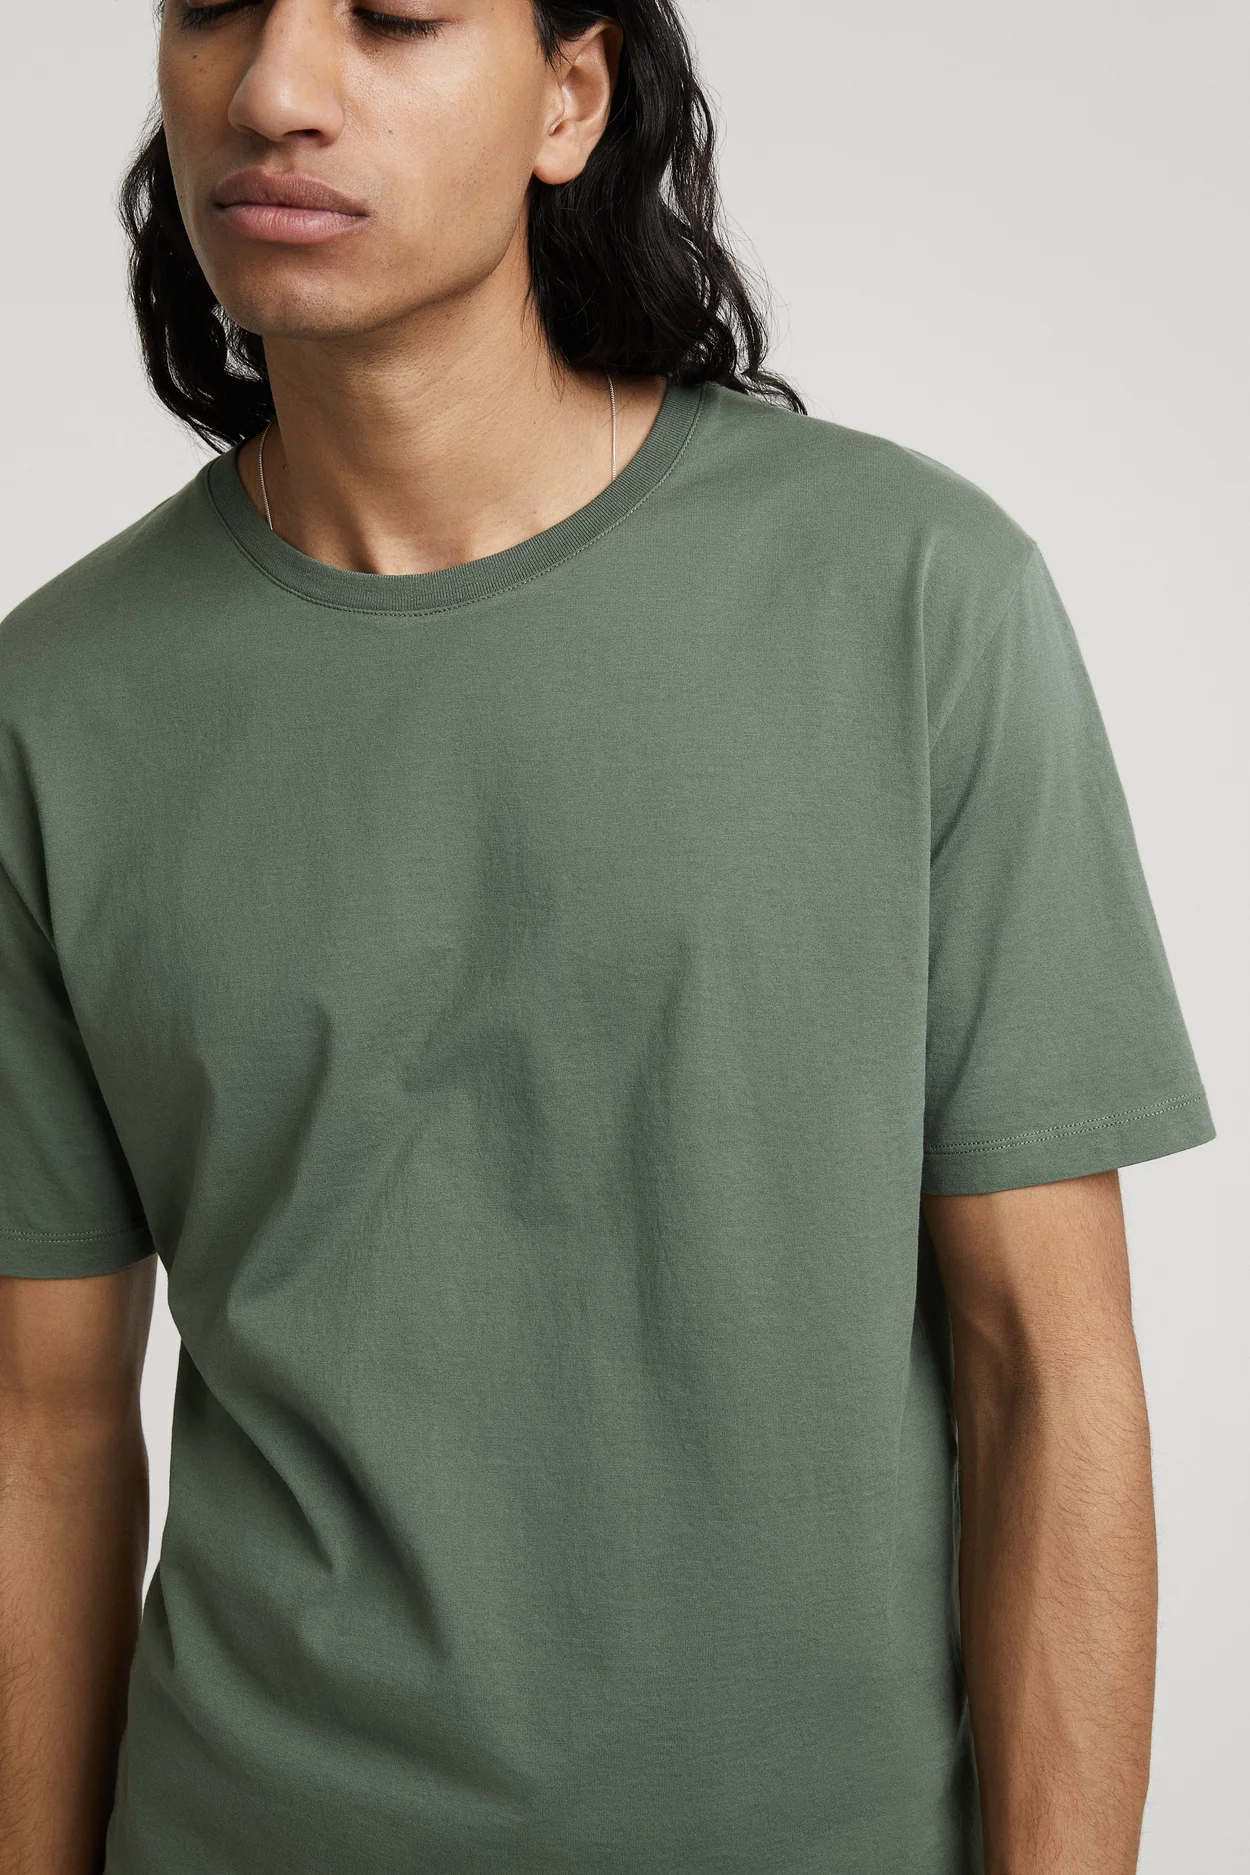 ASKET - Long Sleeve T-Shirt Grey Melange - Men